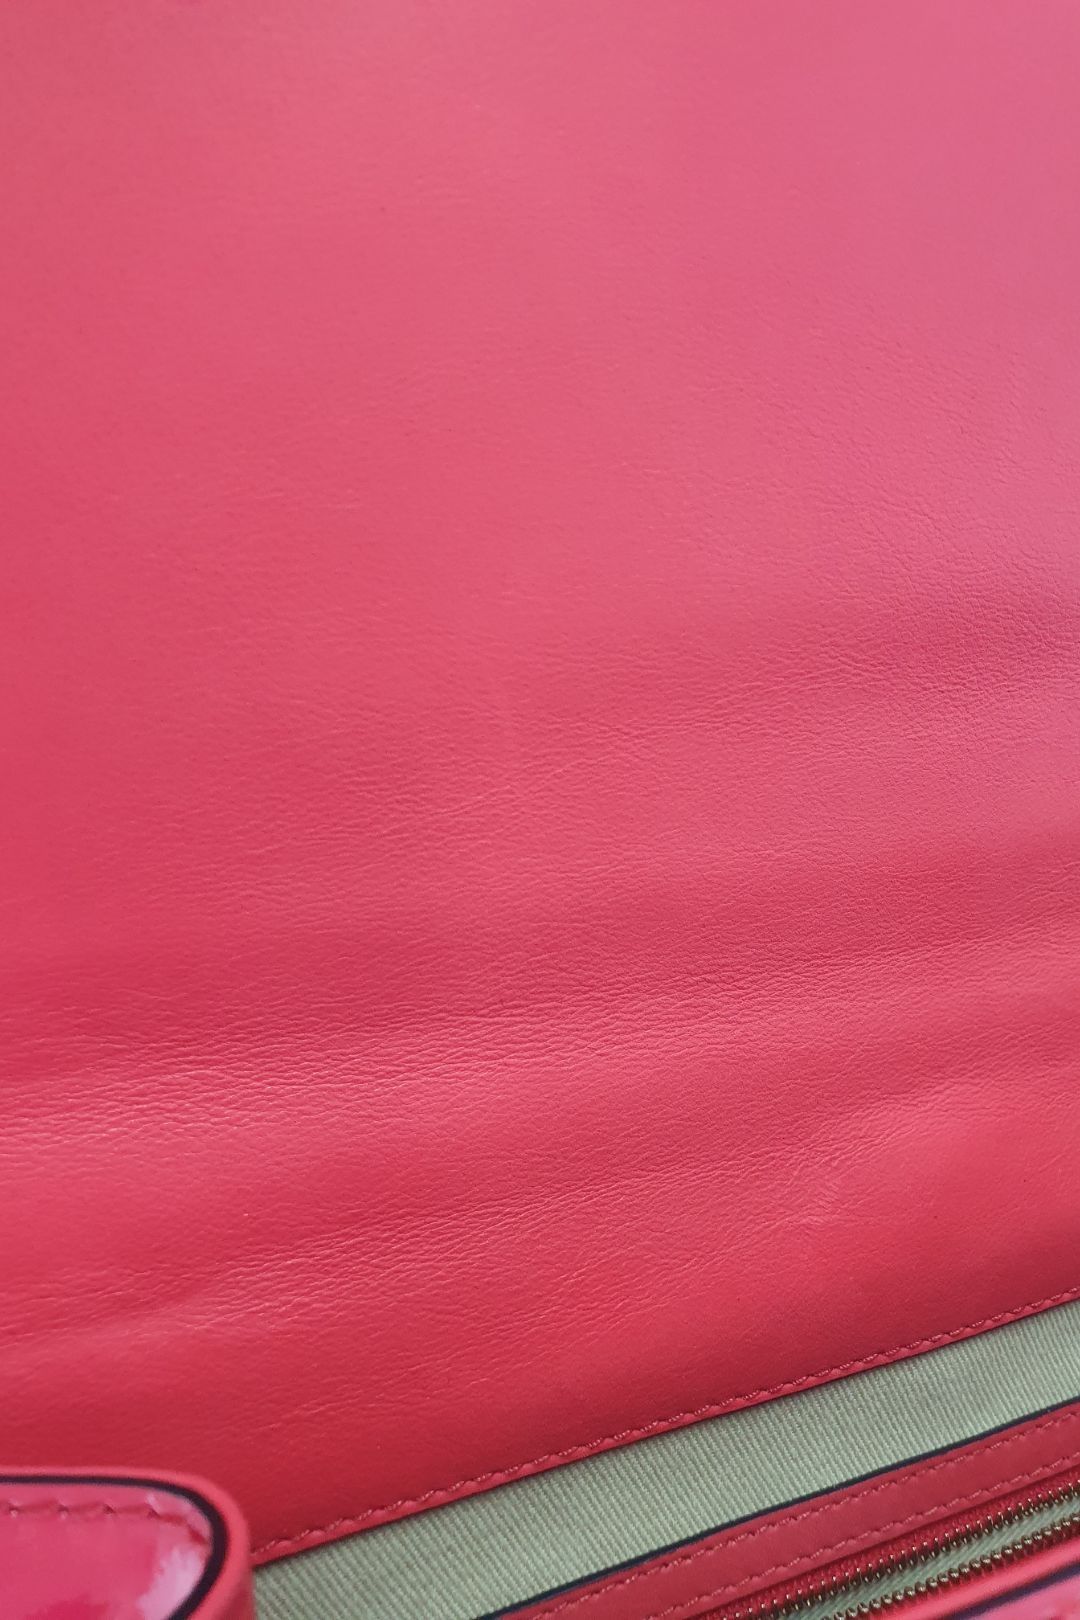 Valentino - Pink Rock Stud Handbag